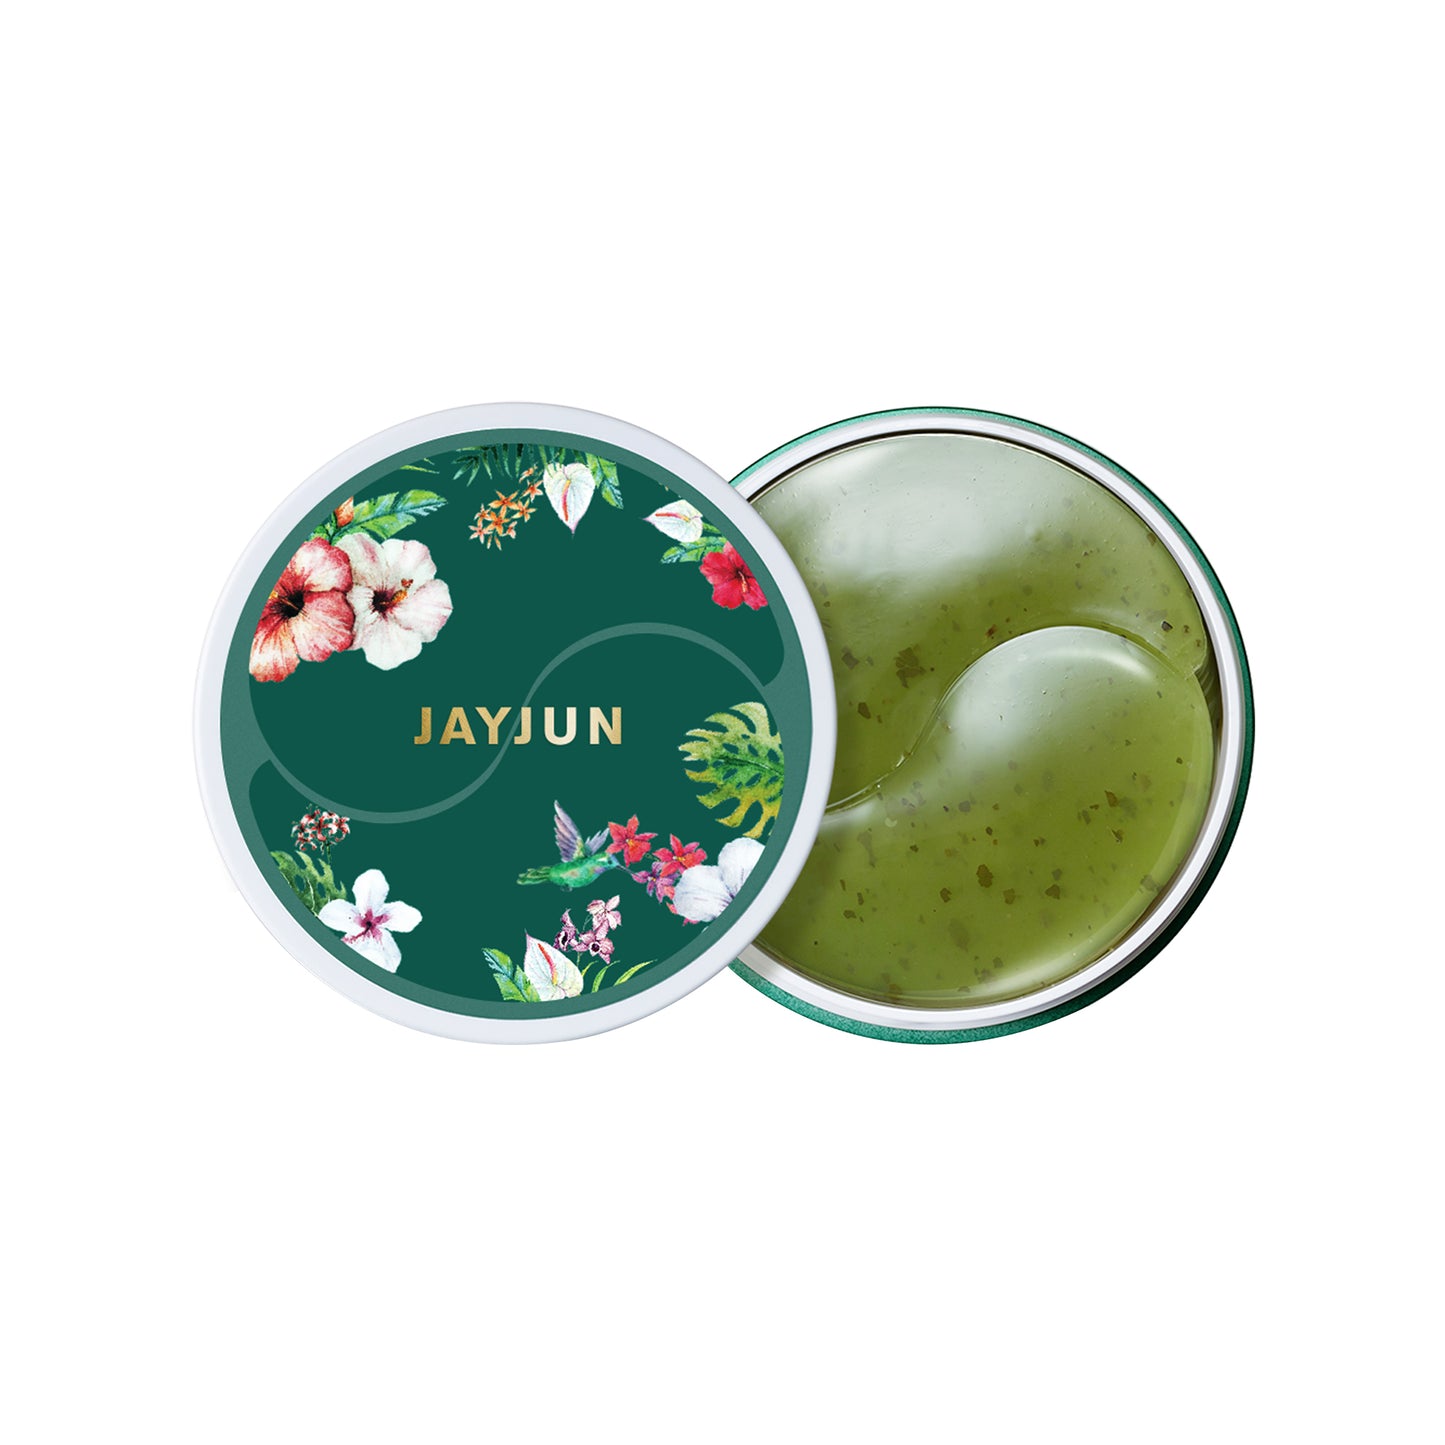 JAYJUN EYE GEL PATCH - Green Tea - 1PACK (60PCS) asian korean skincare montreal toronto canada thekshop thekshop.ca natural organic vegan cruelty-free cosmetics 